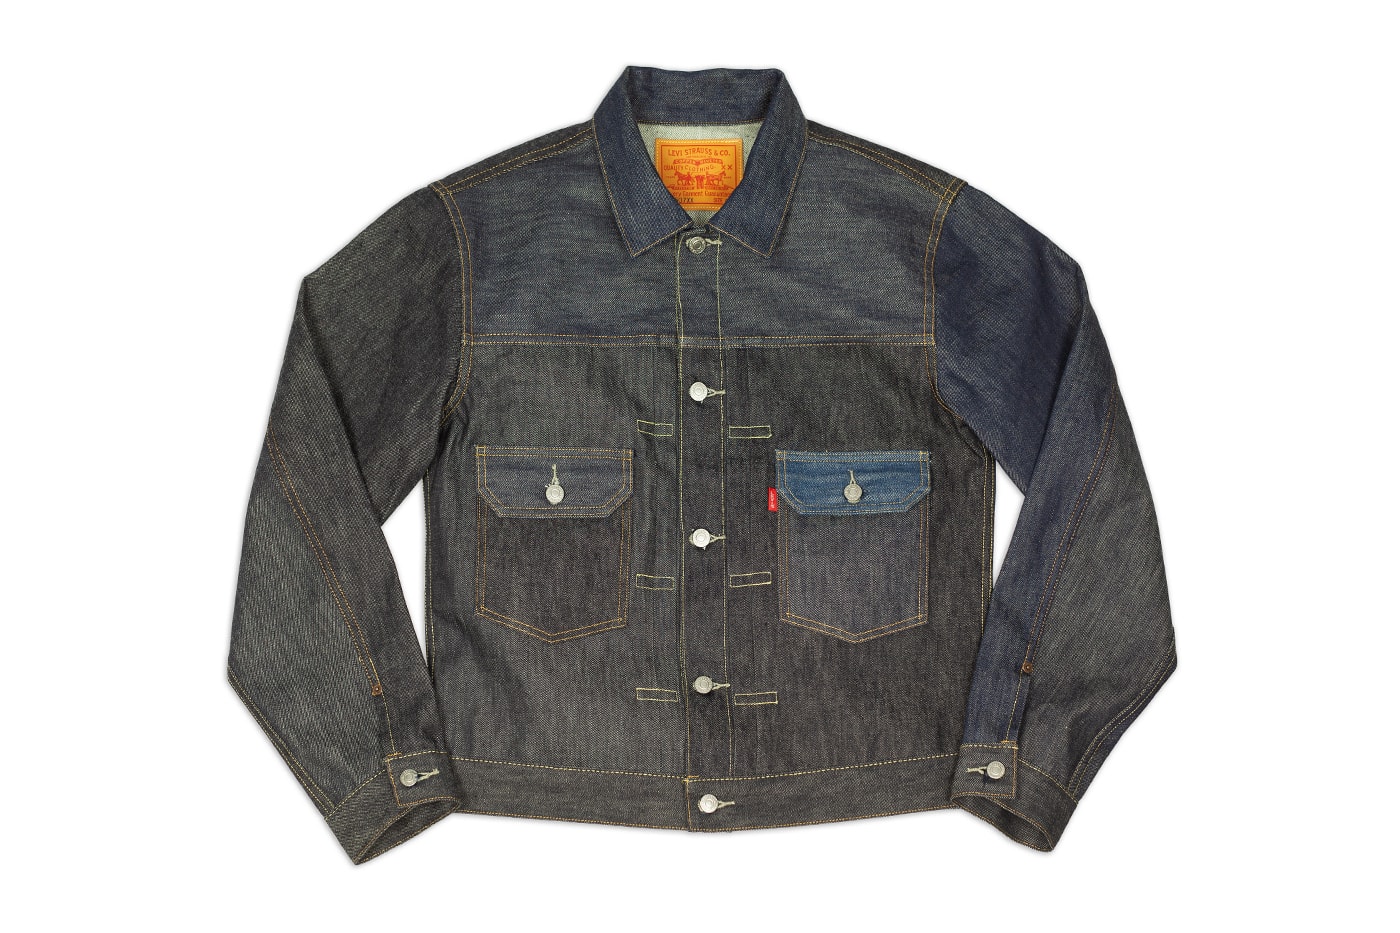 Levis Vintage Clothing Cone Mills White Oak Collection levi jeans denim jacket selvedge trucker farewell partnership fabric north carolina